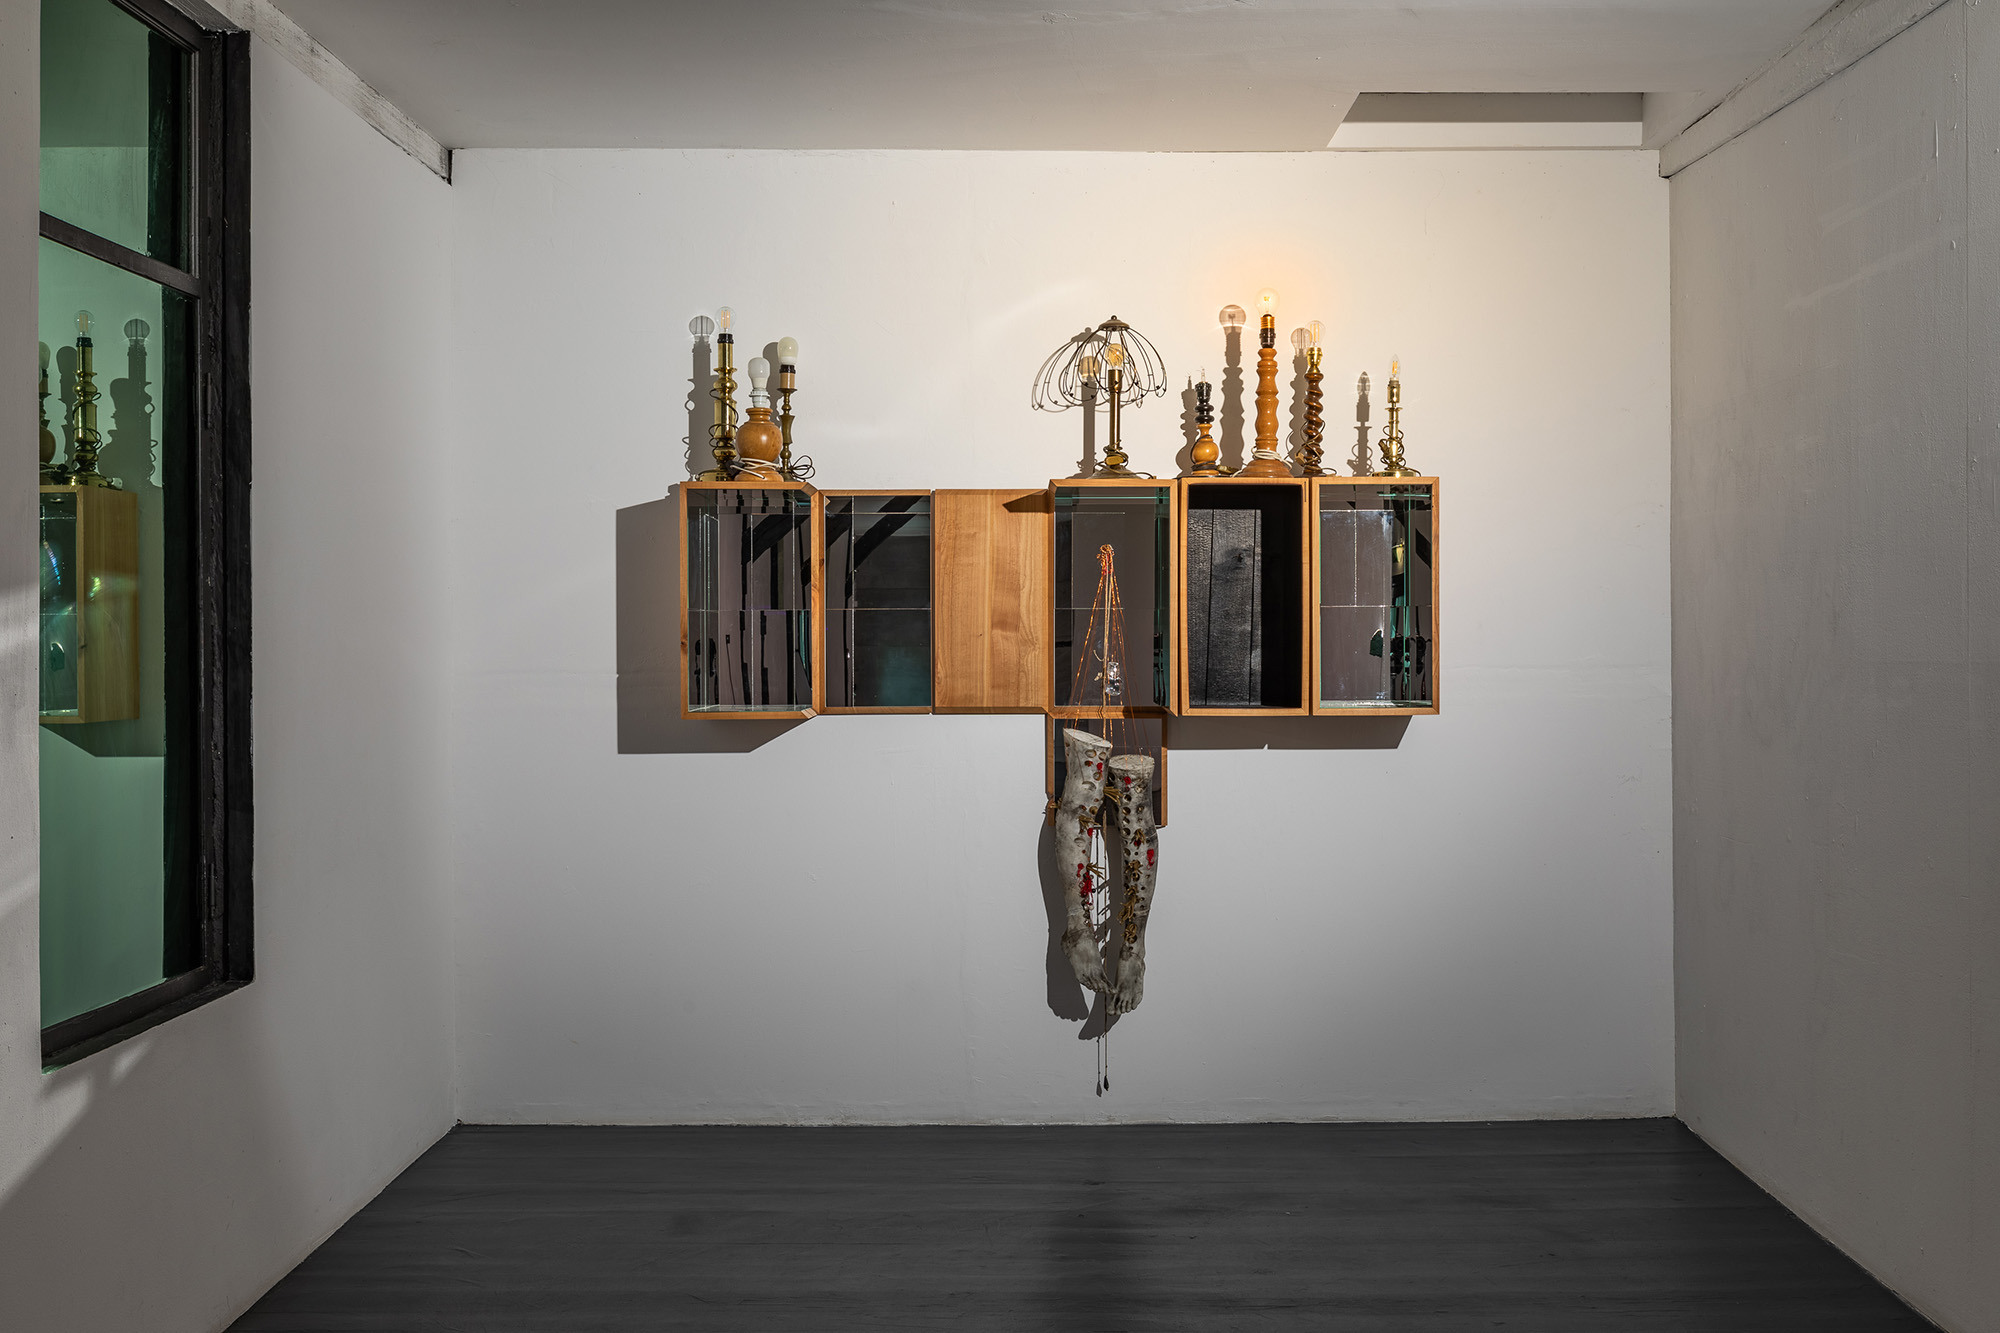 Paulo Wirz, Arcabouço [Skeleton], 2023, wood, mirrors, stand lamps, 3D printed leg, wax, copper wire, ca. 200 x 200 cm. Photo: Kilian Bannwart